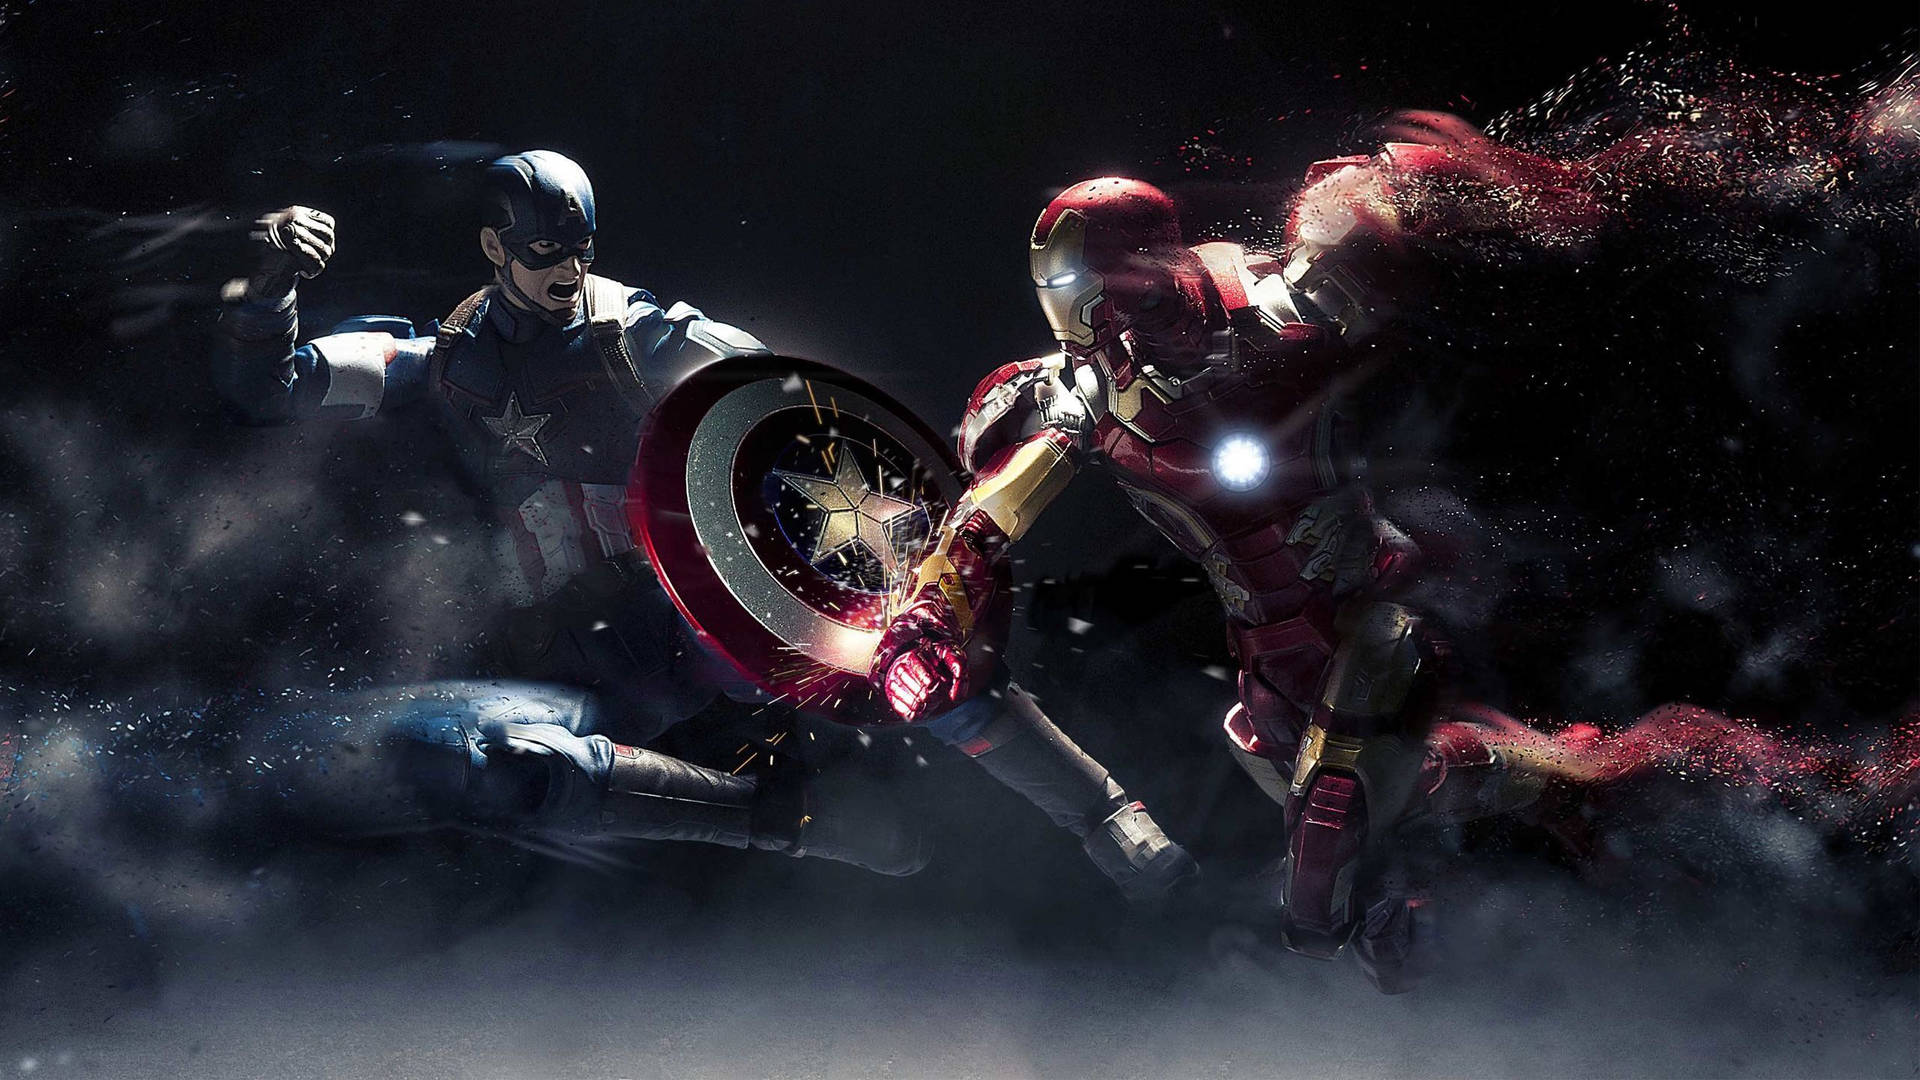 Bedste Captain America Iron Man Fight Scener Wallpaper